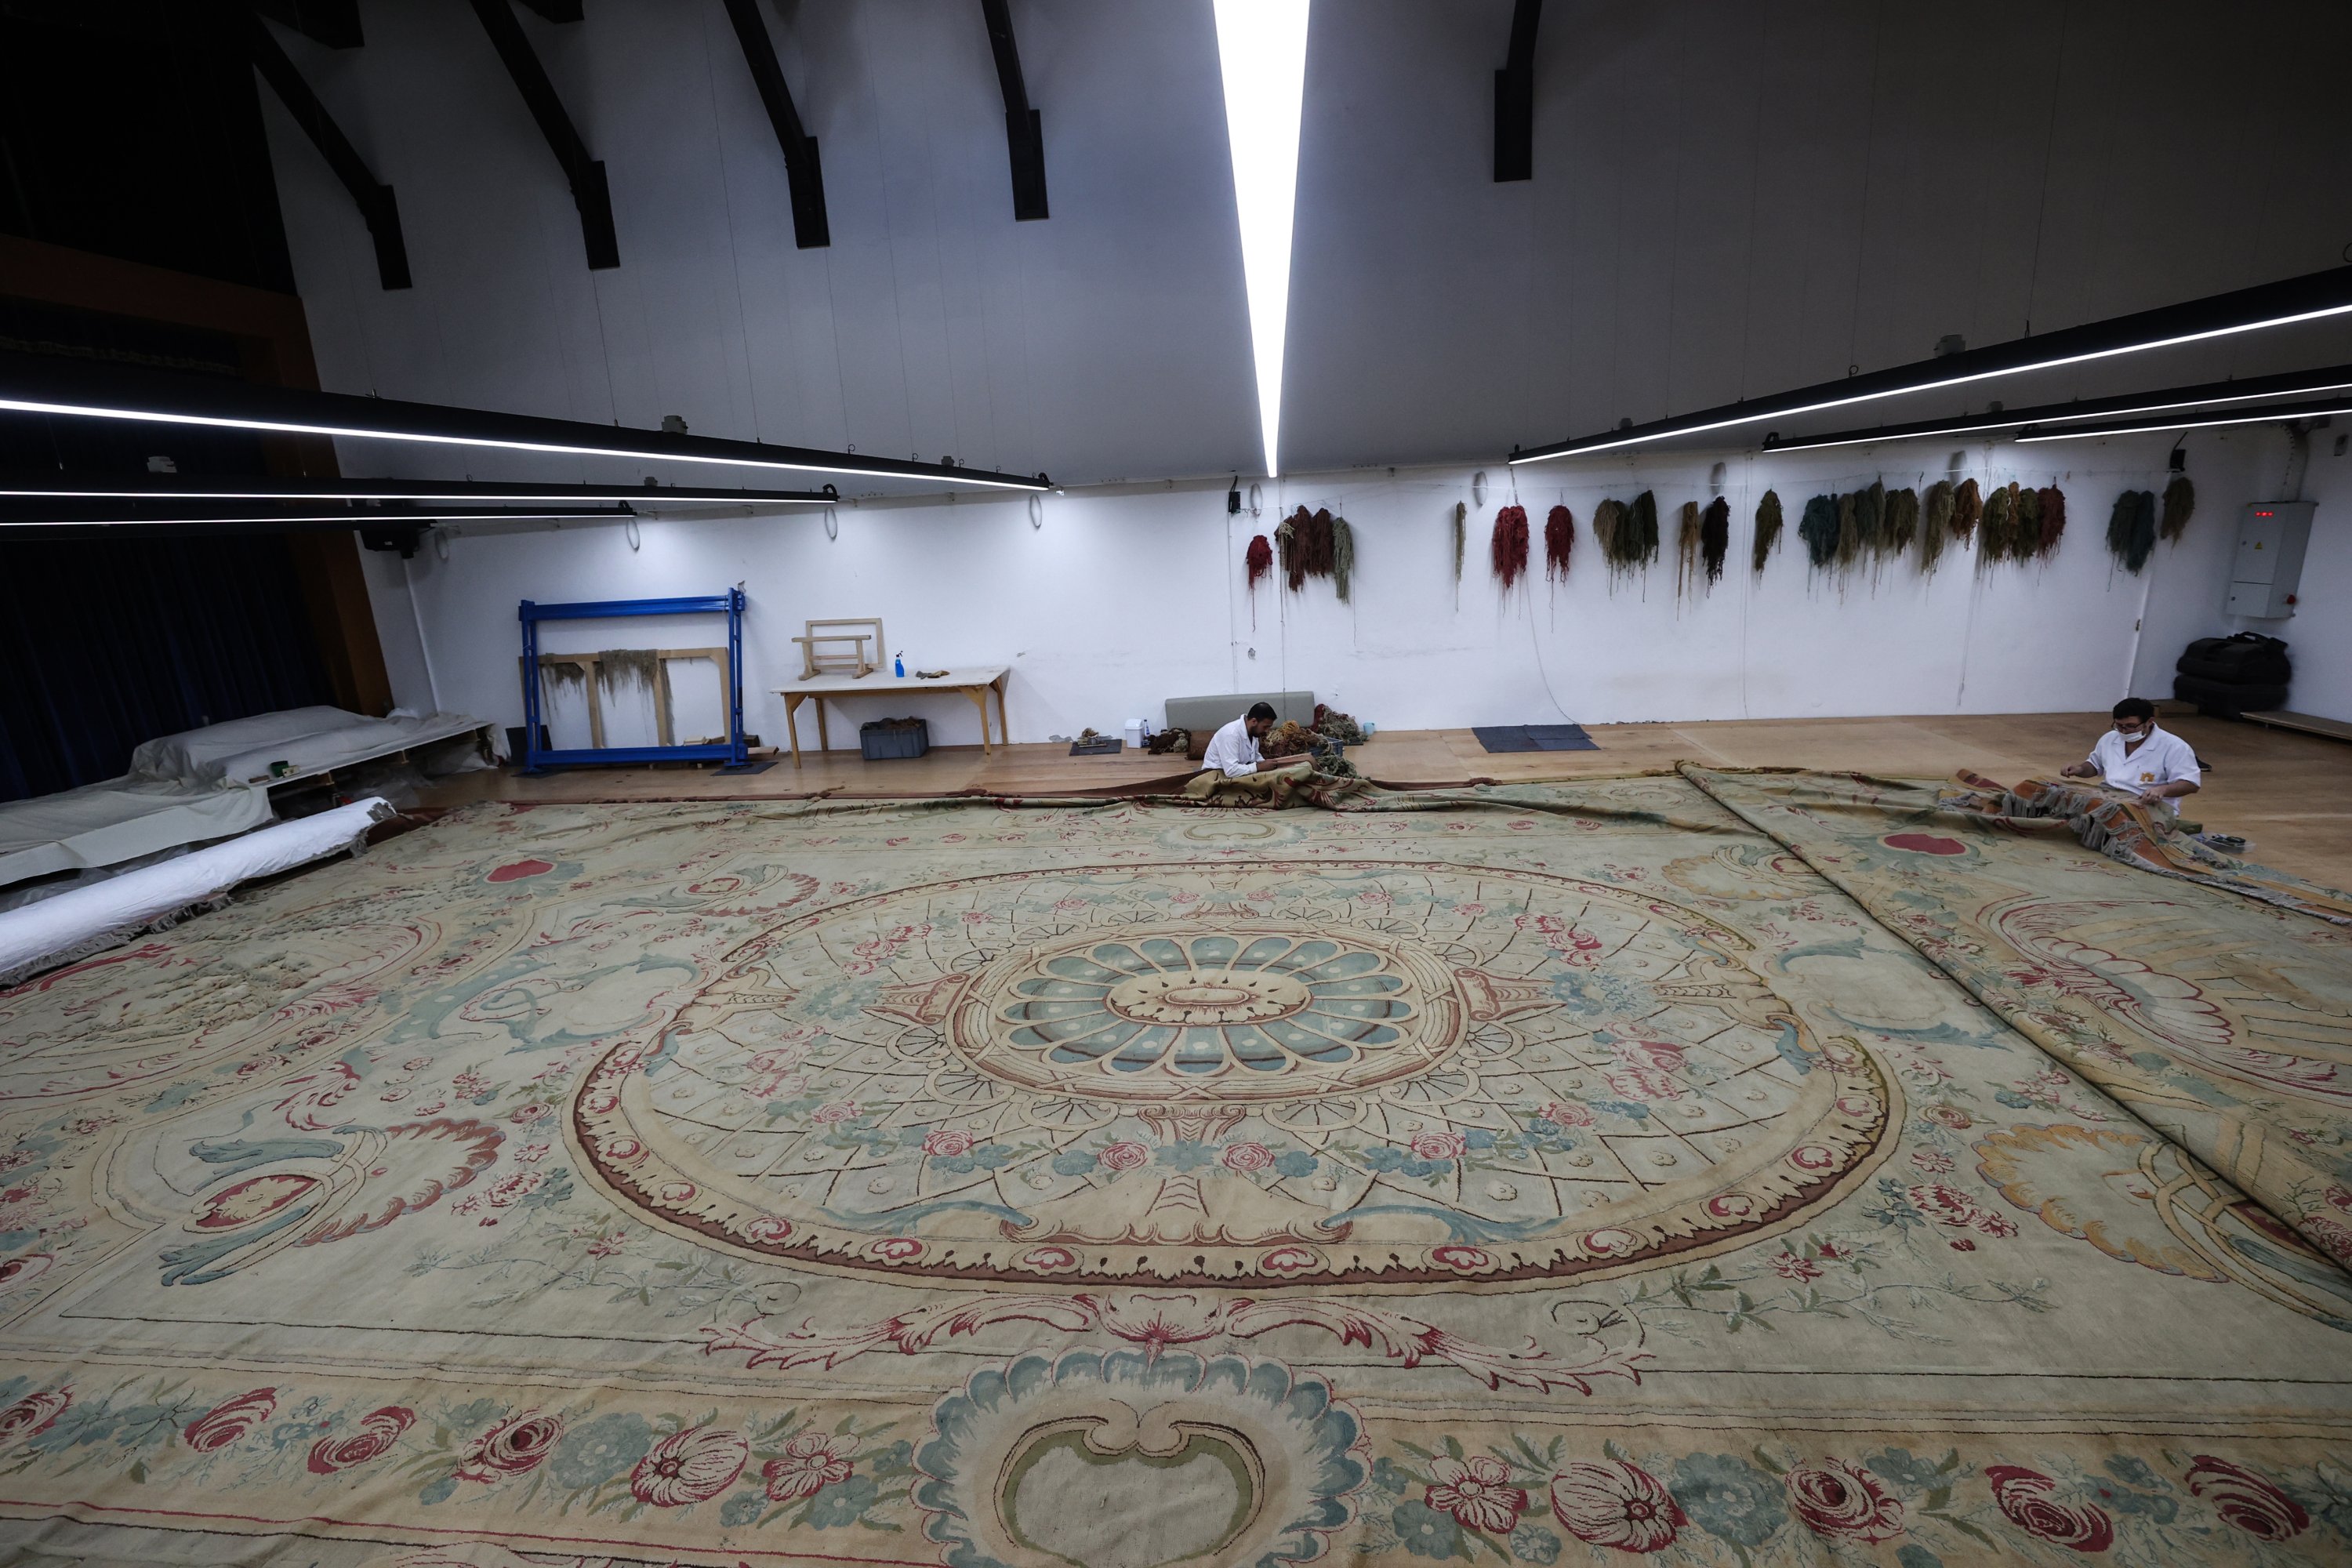 Largest carpet in Istanbul's Dolmabahçe Palace under restoration